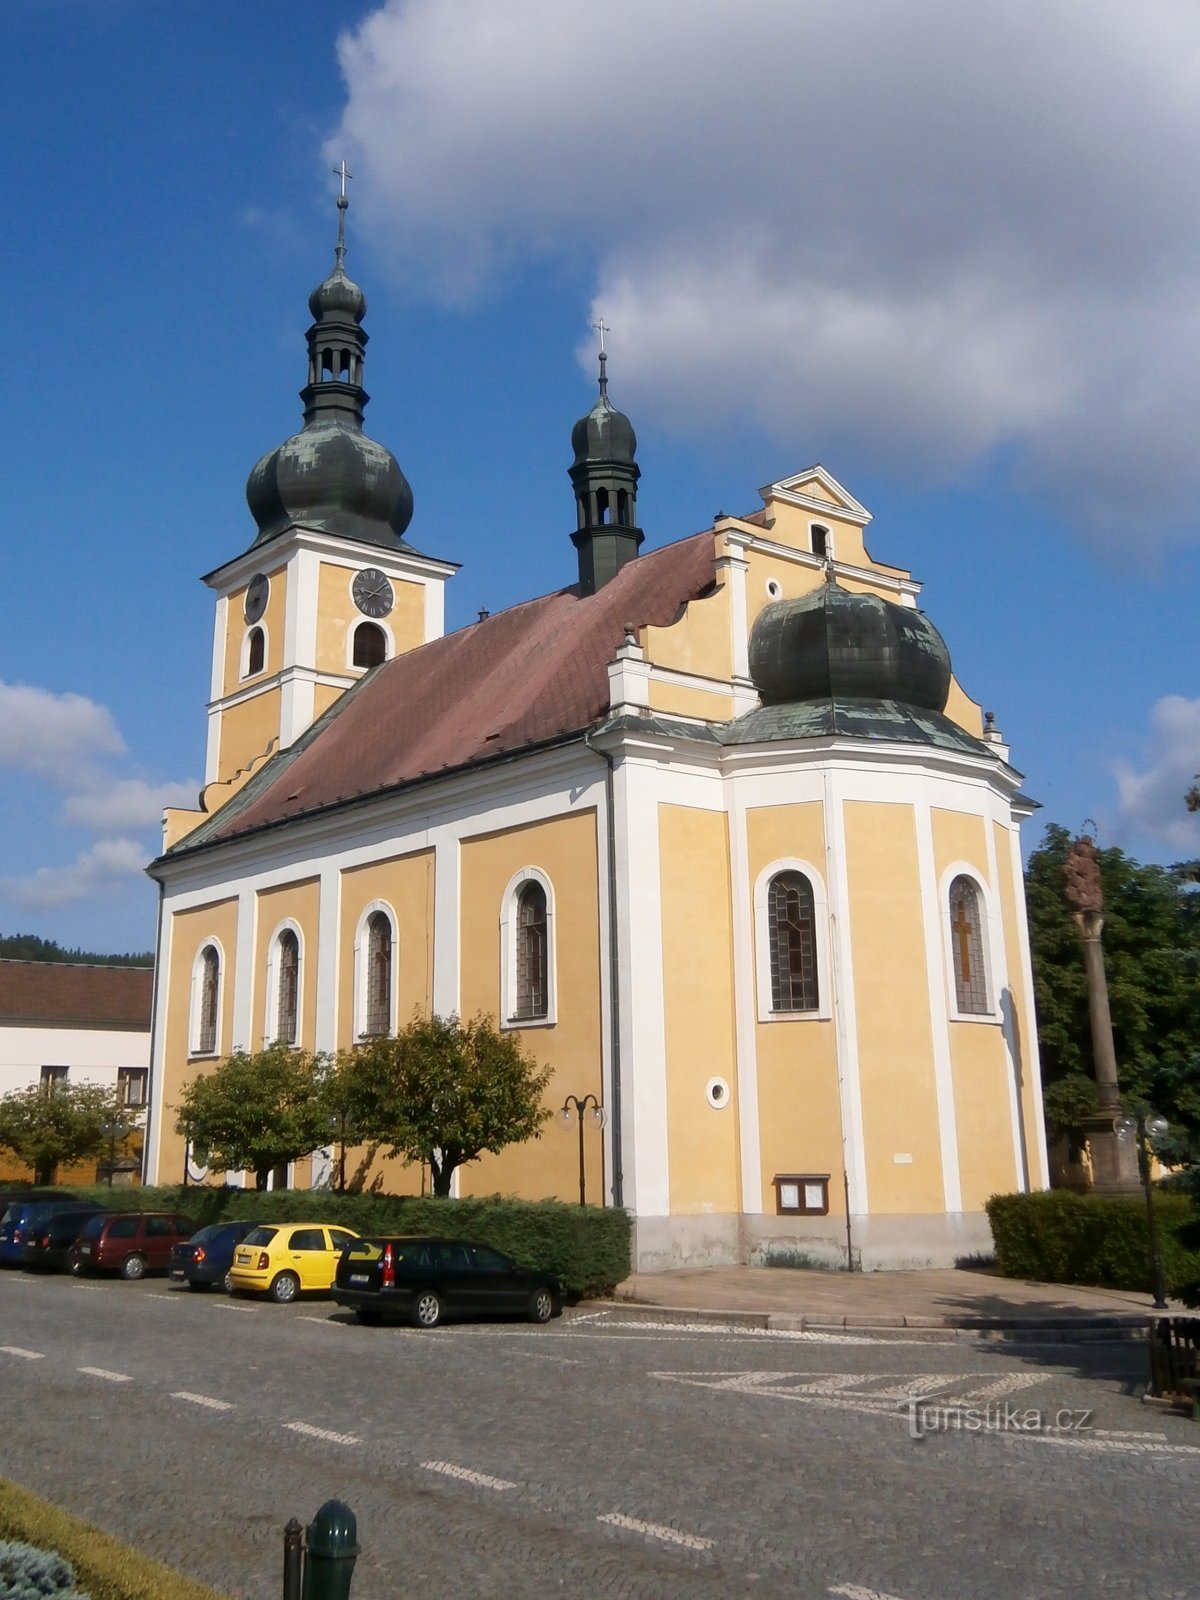 Chiesa di S. Jakub (Úpice, 6.7.2017 luglio XNUMX)